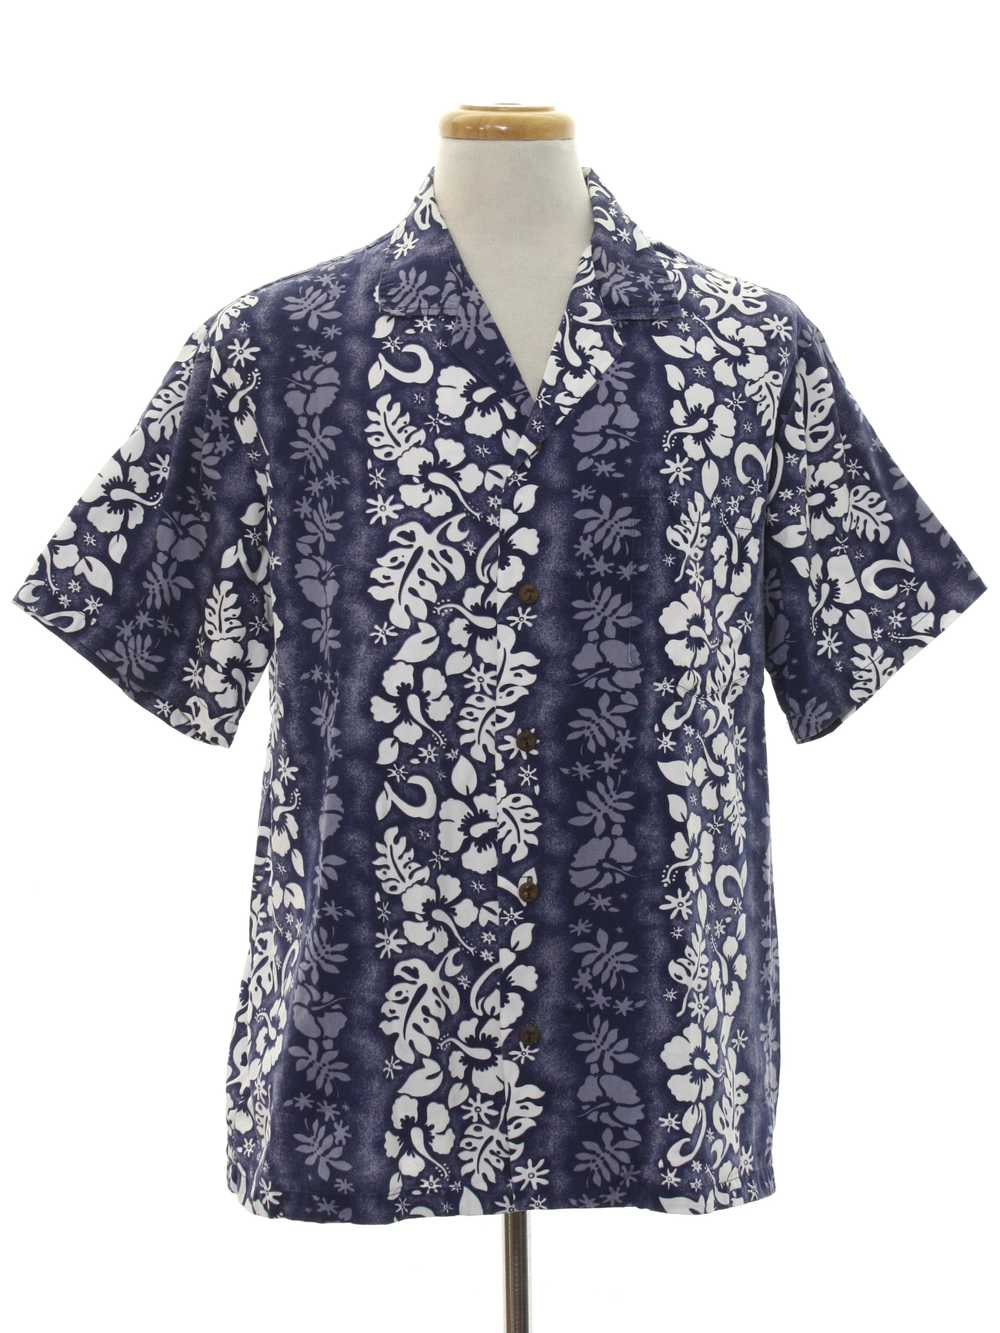 1980's Mens Hawaiian Shirt - image 1